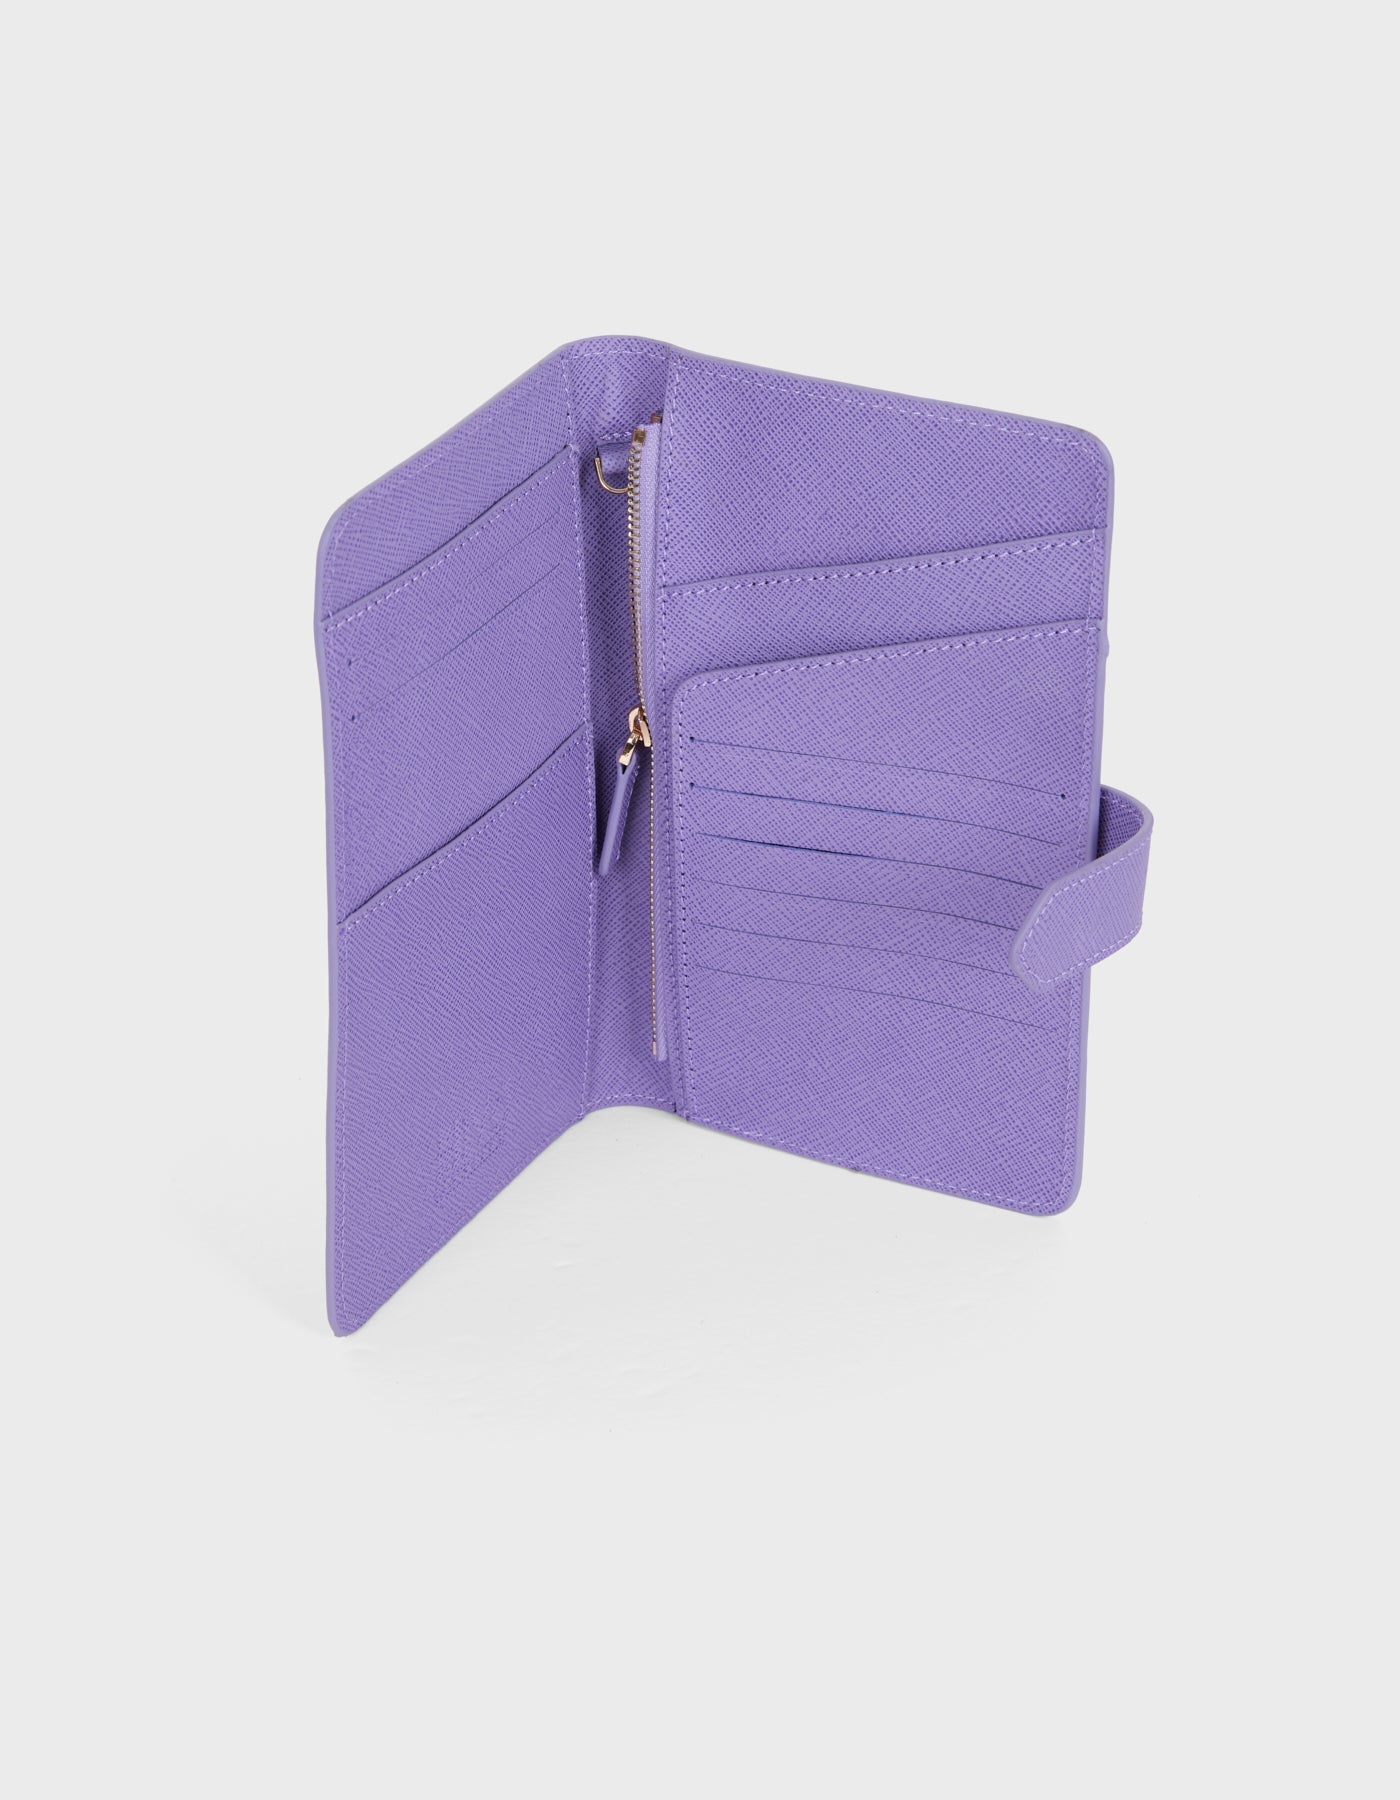 HiVa Atelier | Ita Crossbody Bag and Wallet Lavender Silk | Beautiful and Versatile